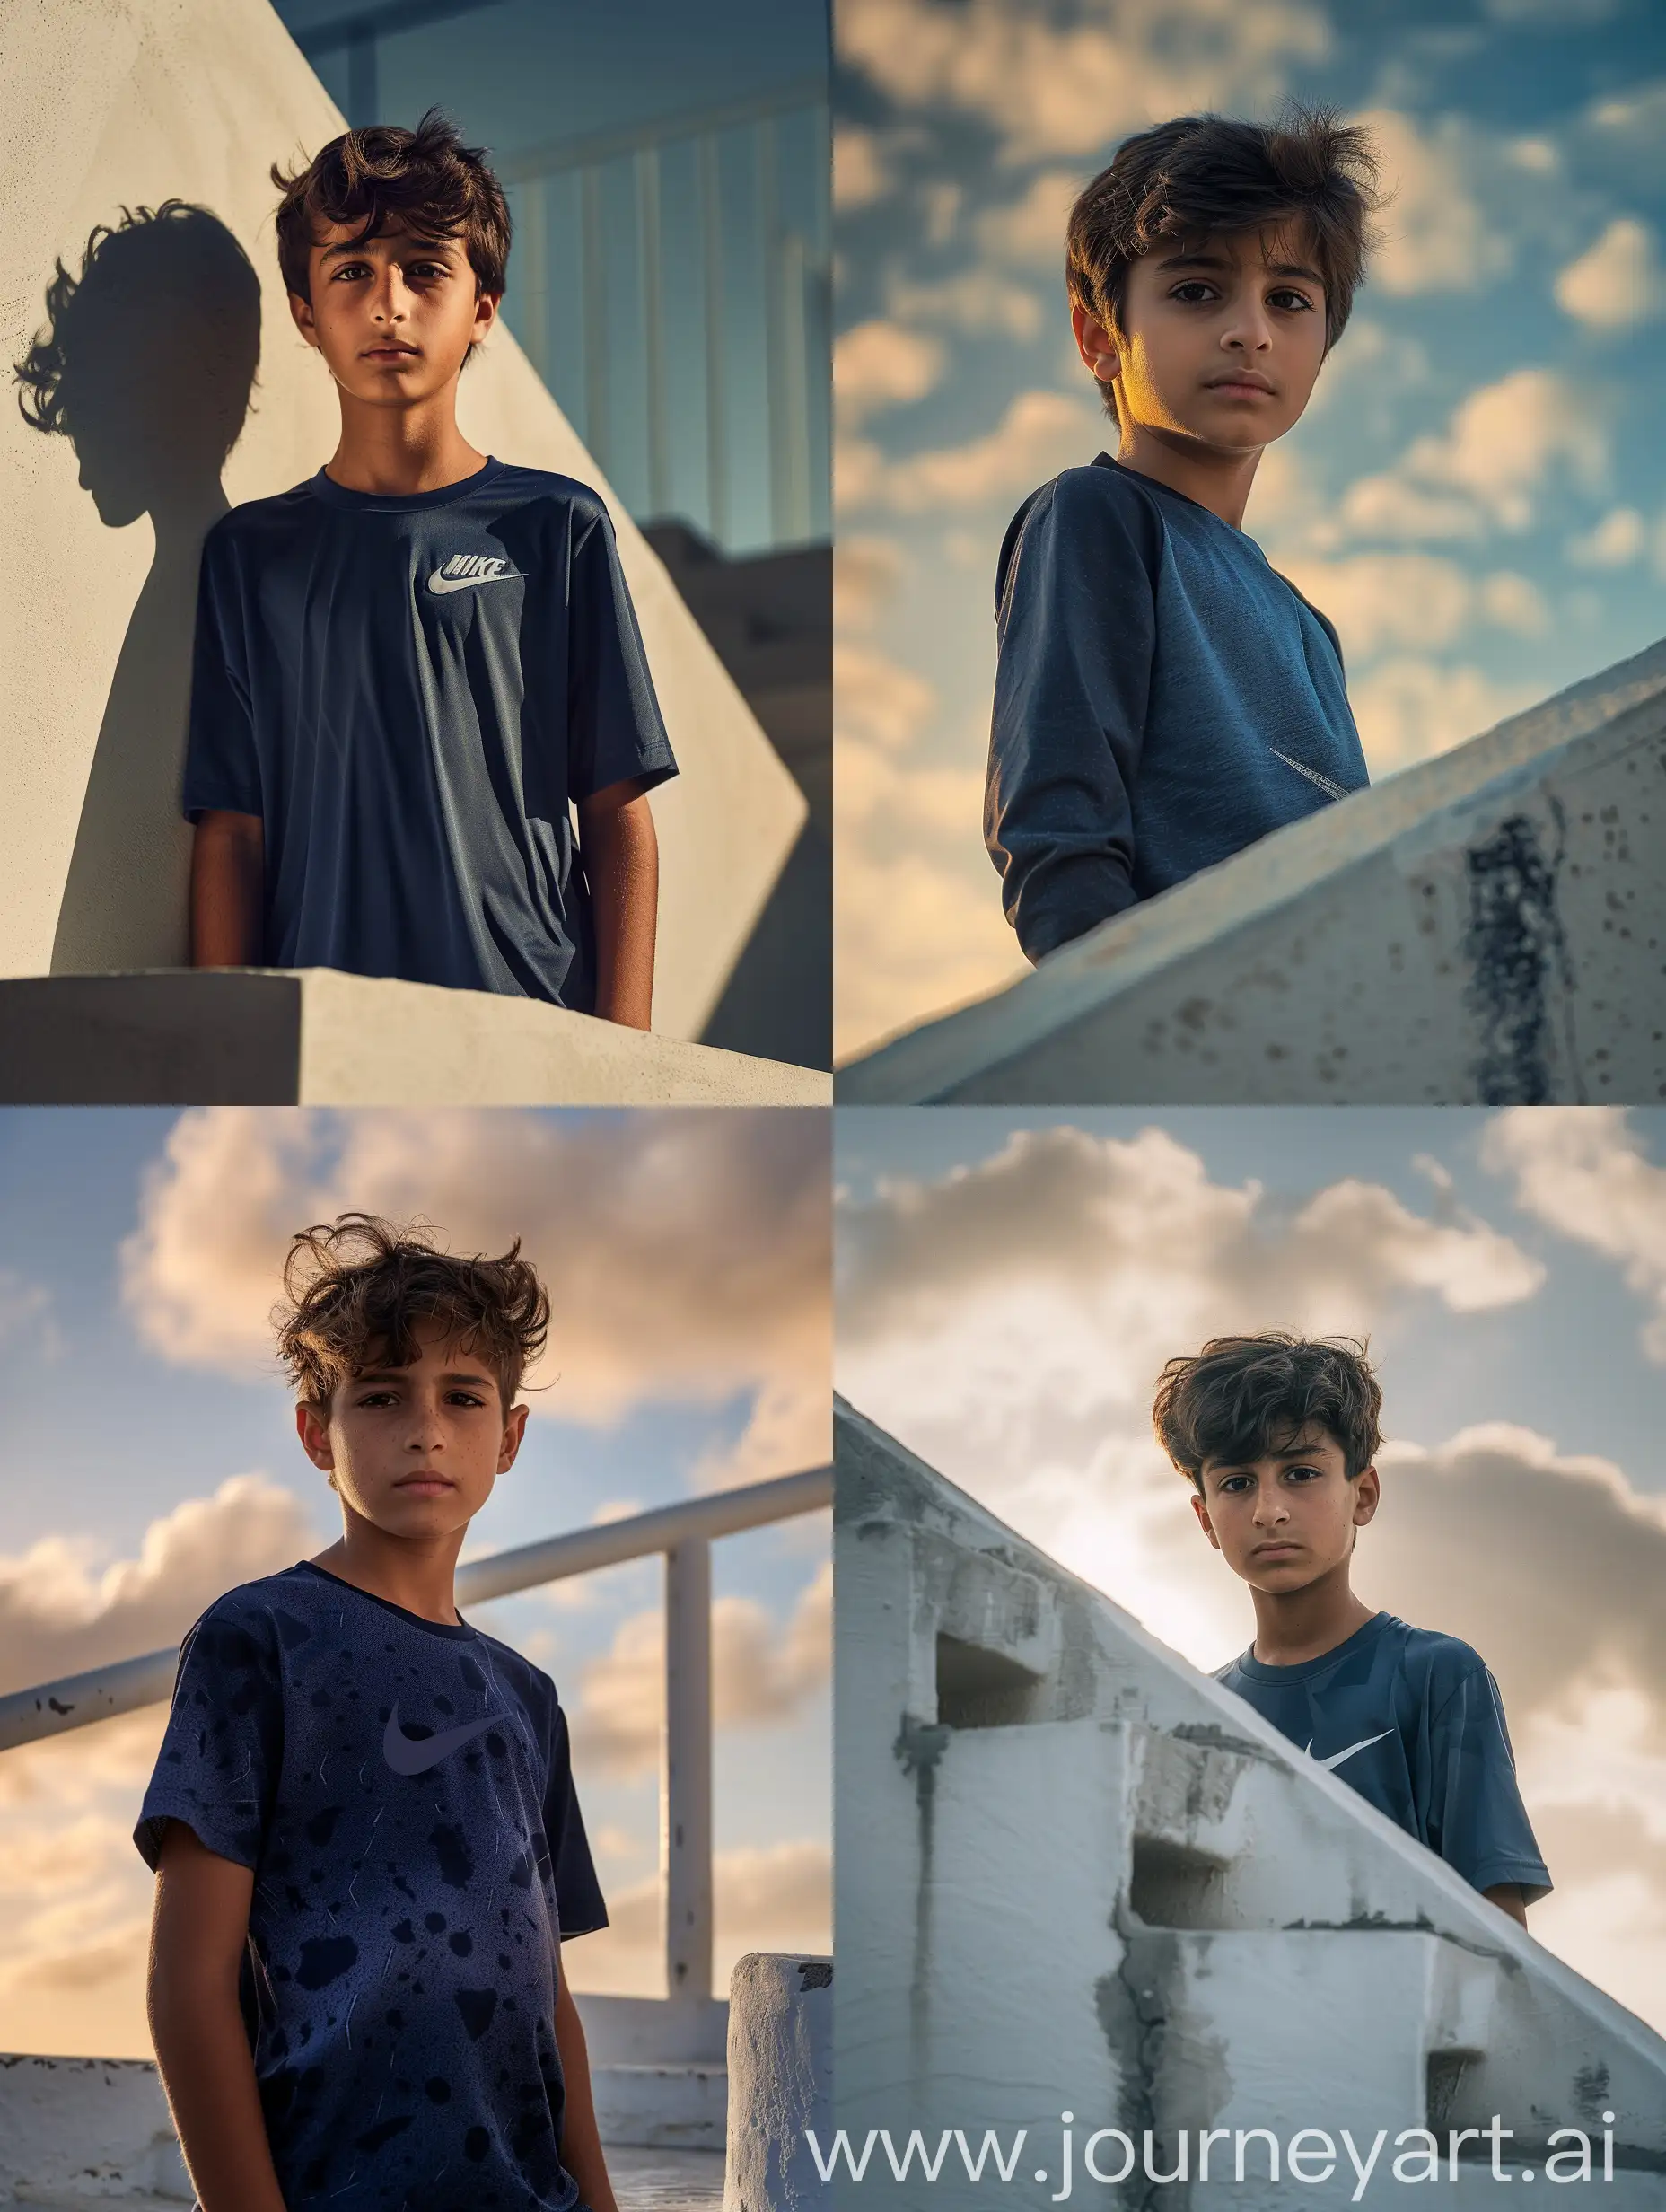 Stylish-Iranian-Boy-in-Nike-Shirt-on-Artistic-Rotating-Step